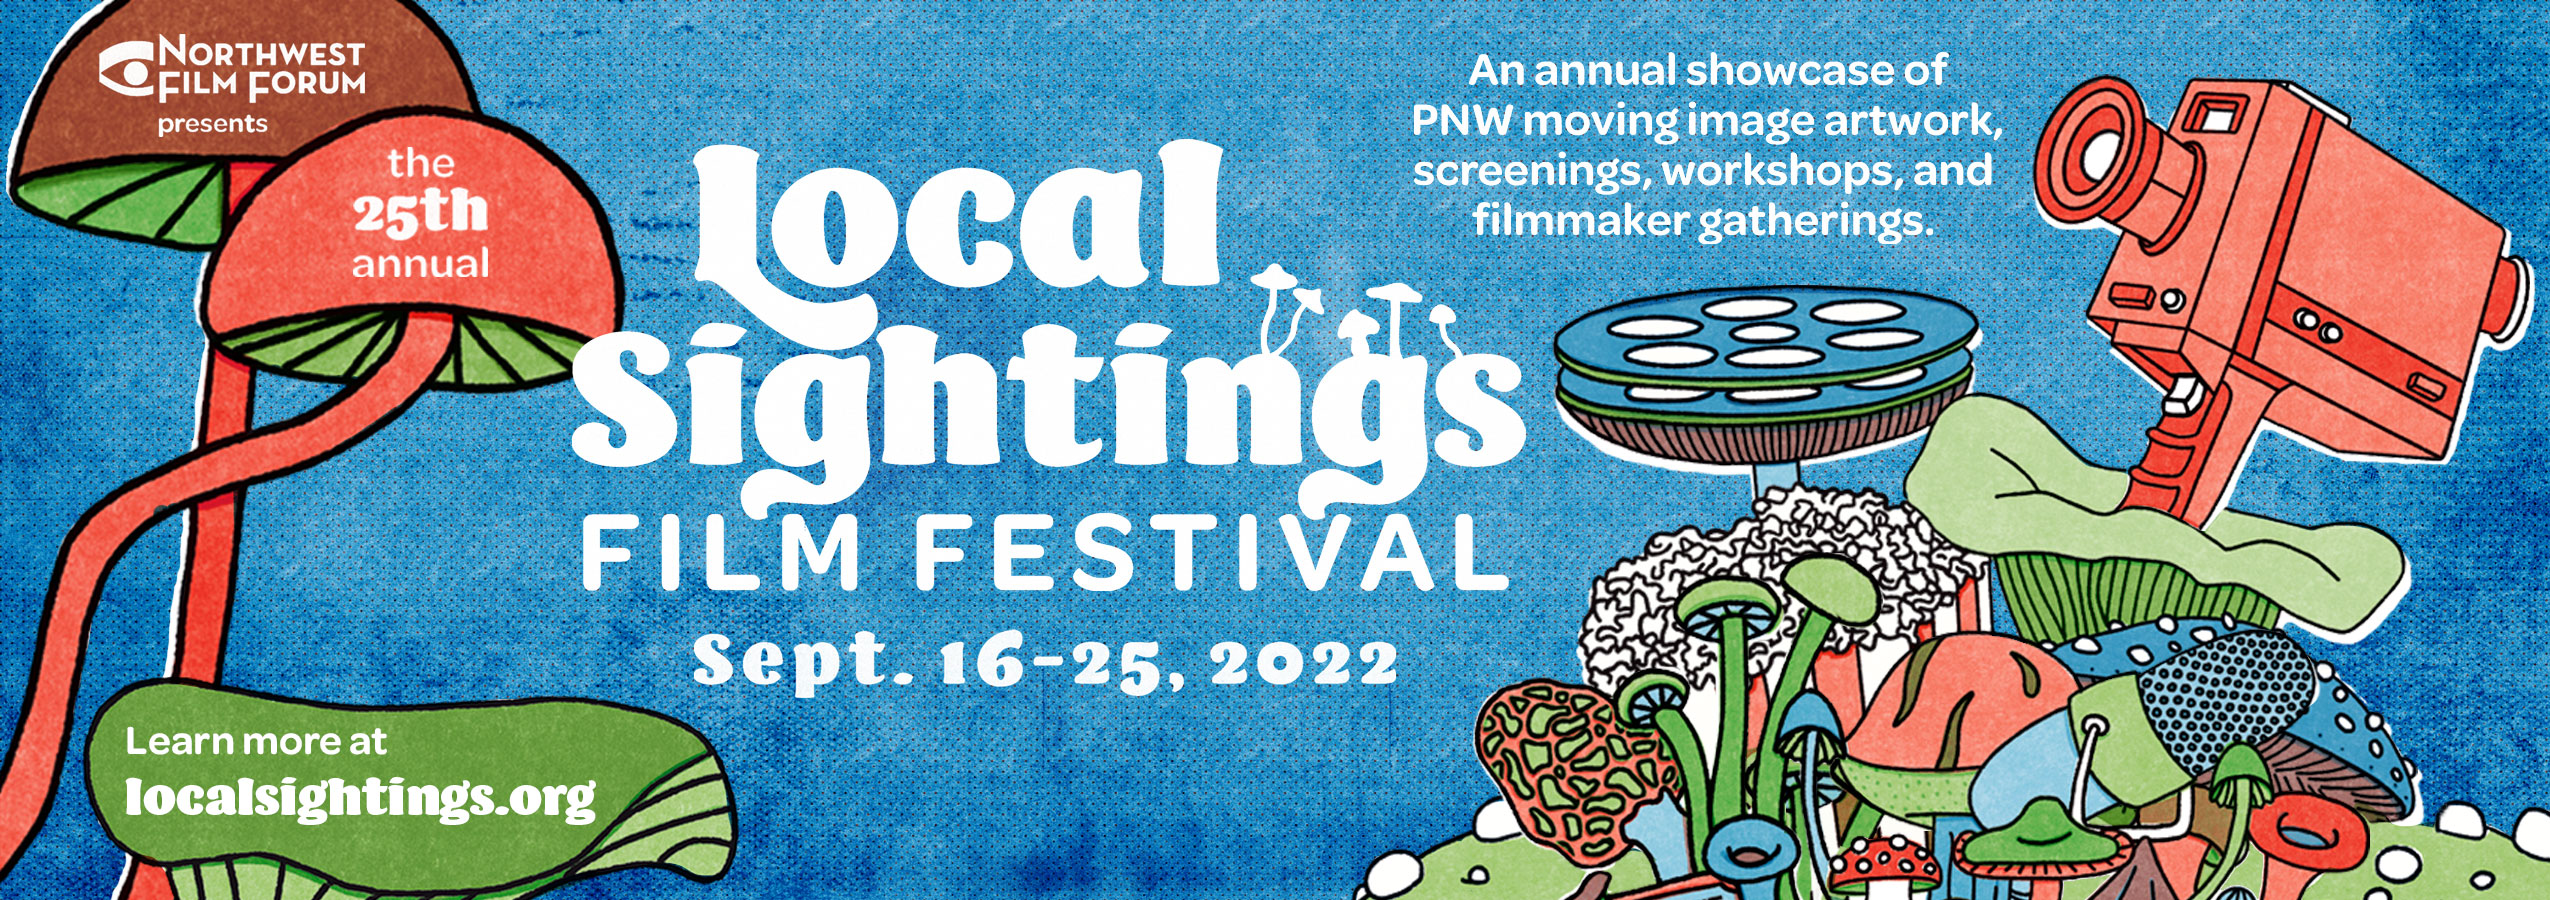 Local Sightings Film Festival 2022